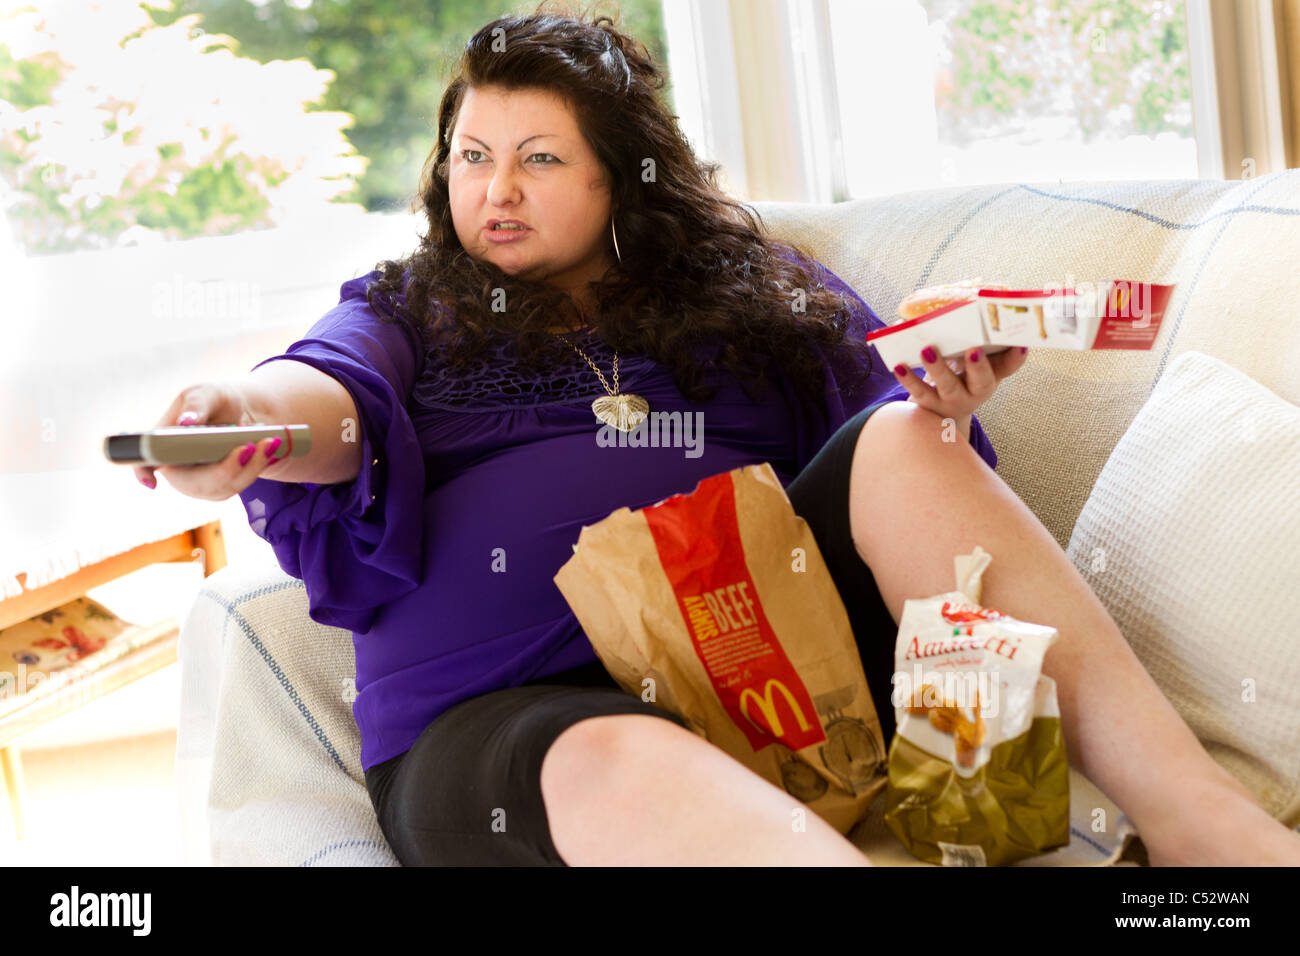 woman-eating-fatty-food-C52WAN.jpg